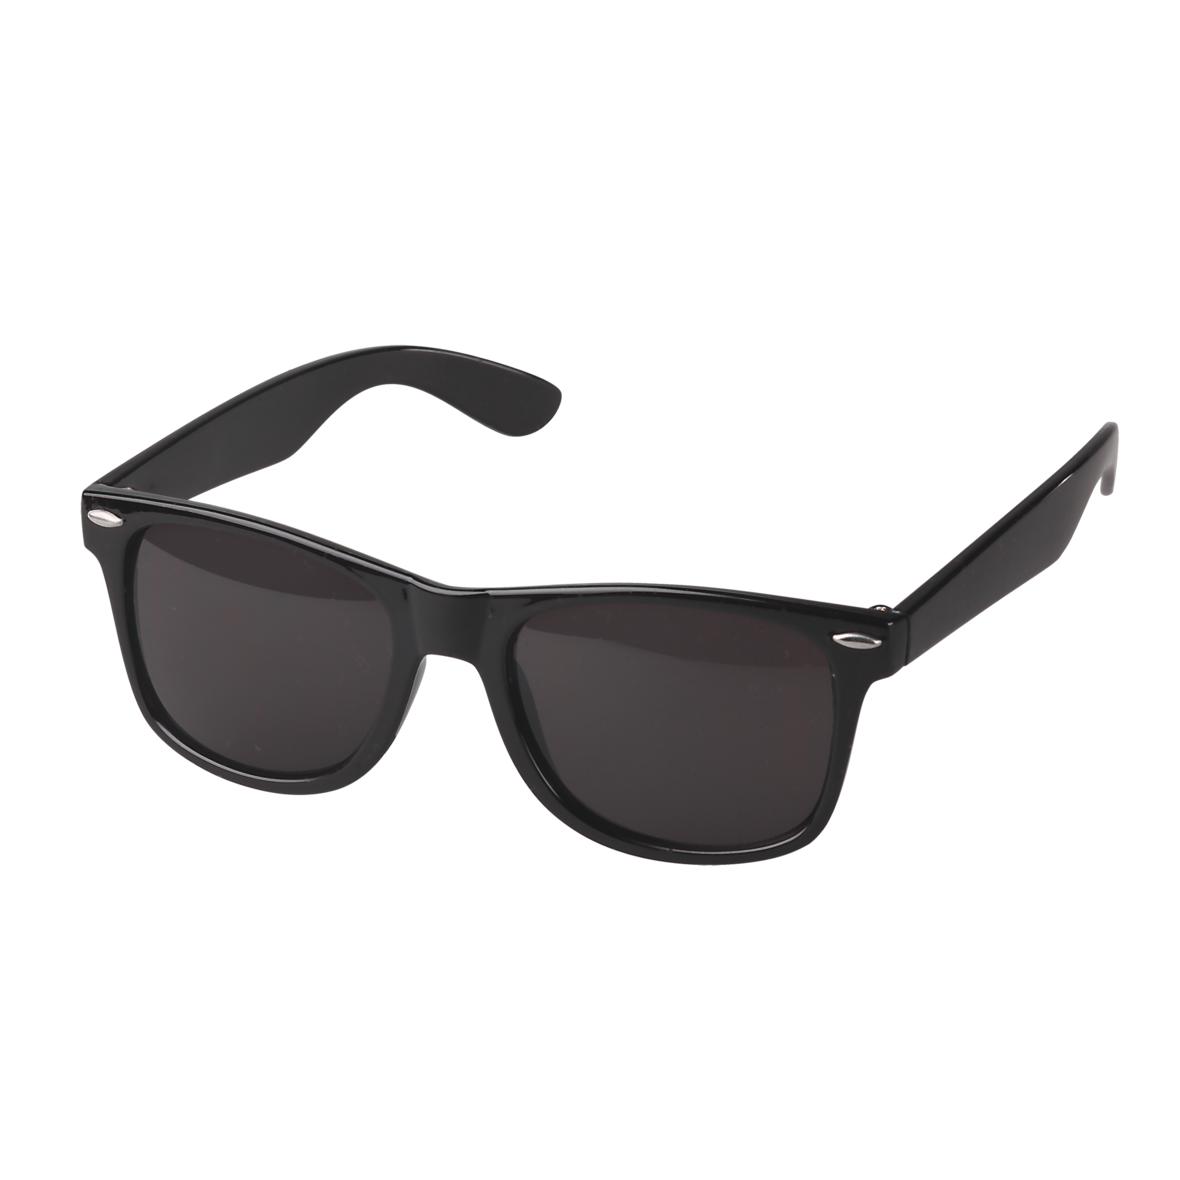 Sunglasses Blues, black-07878002-00002